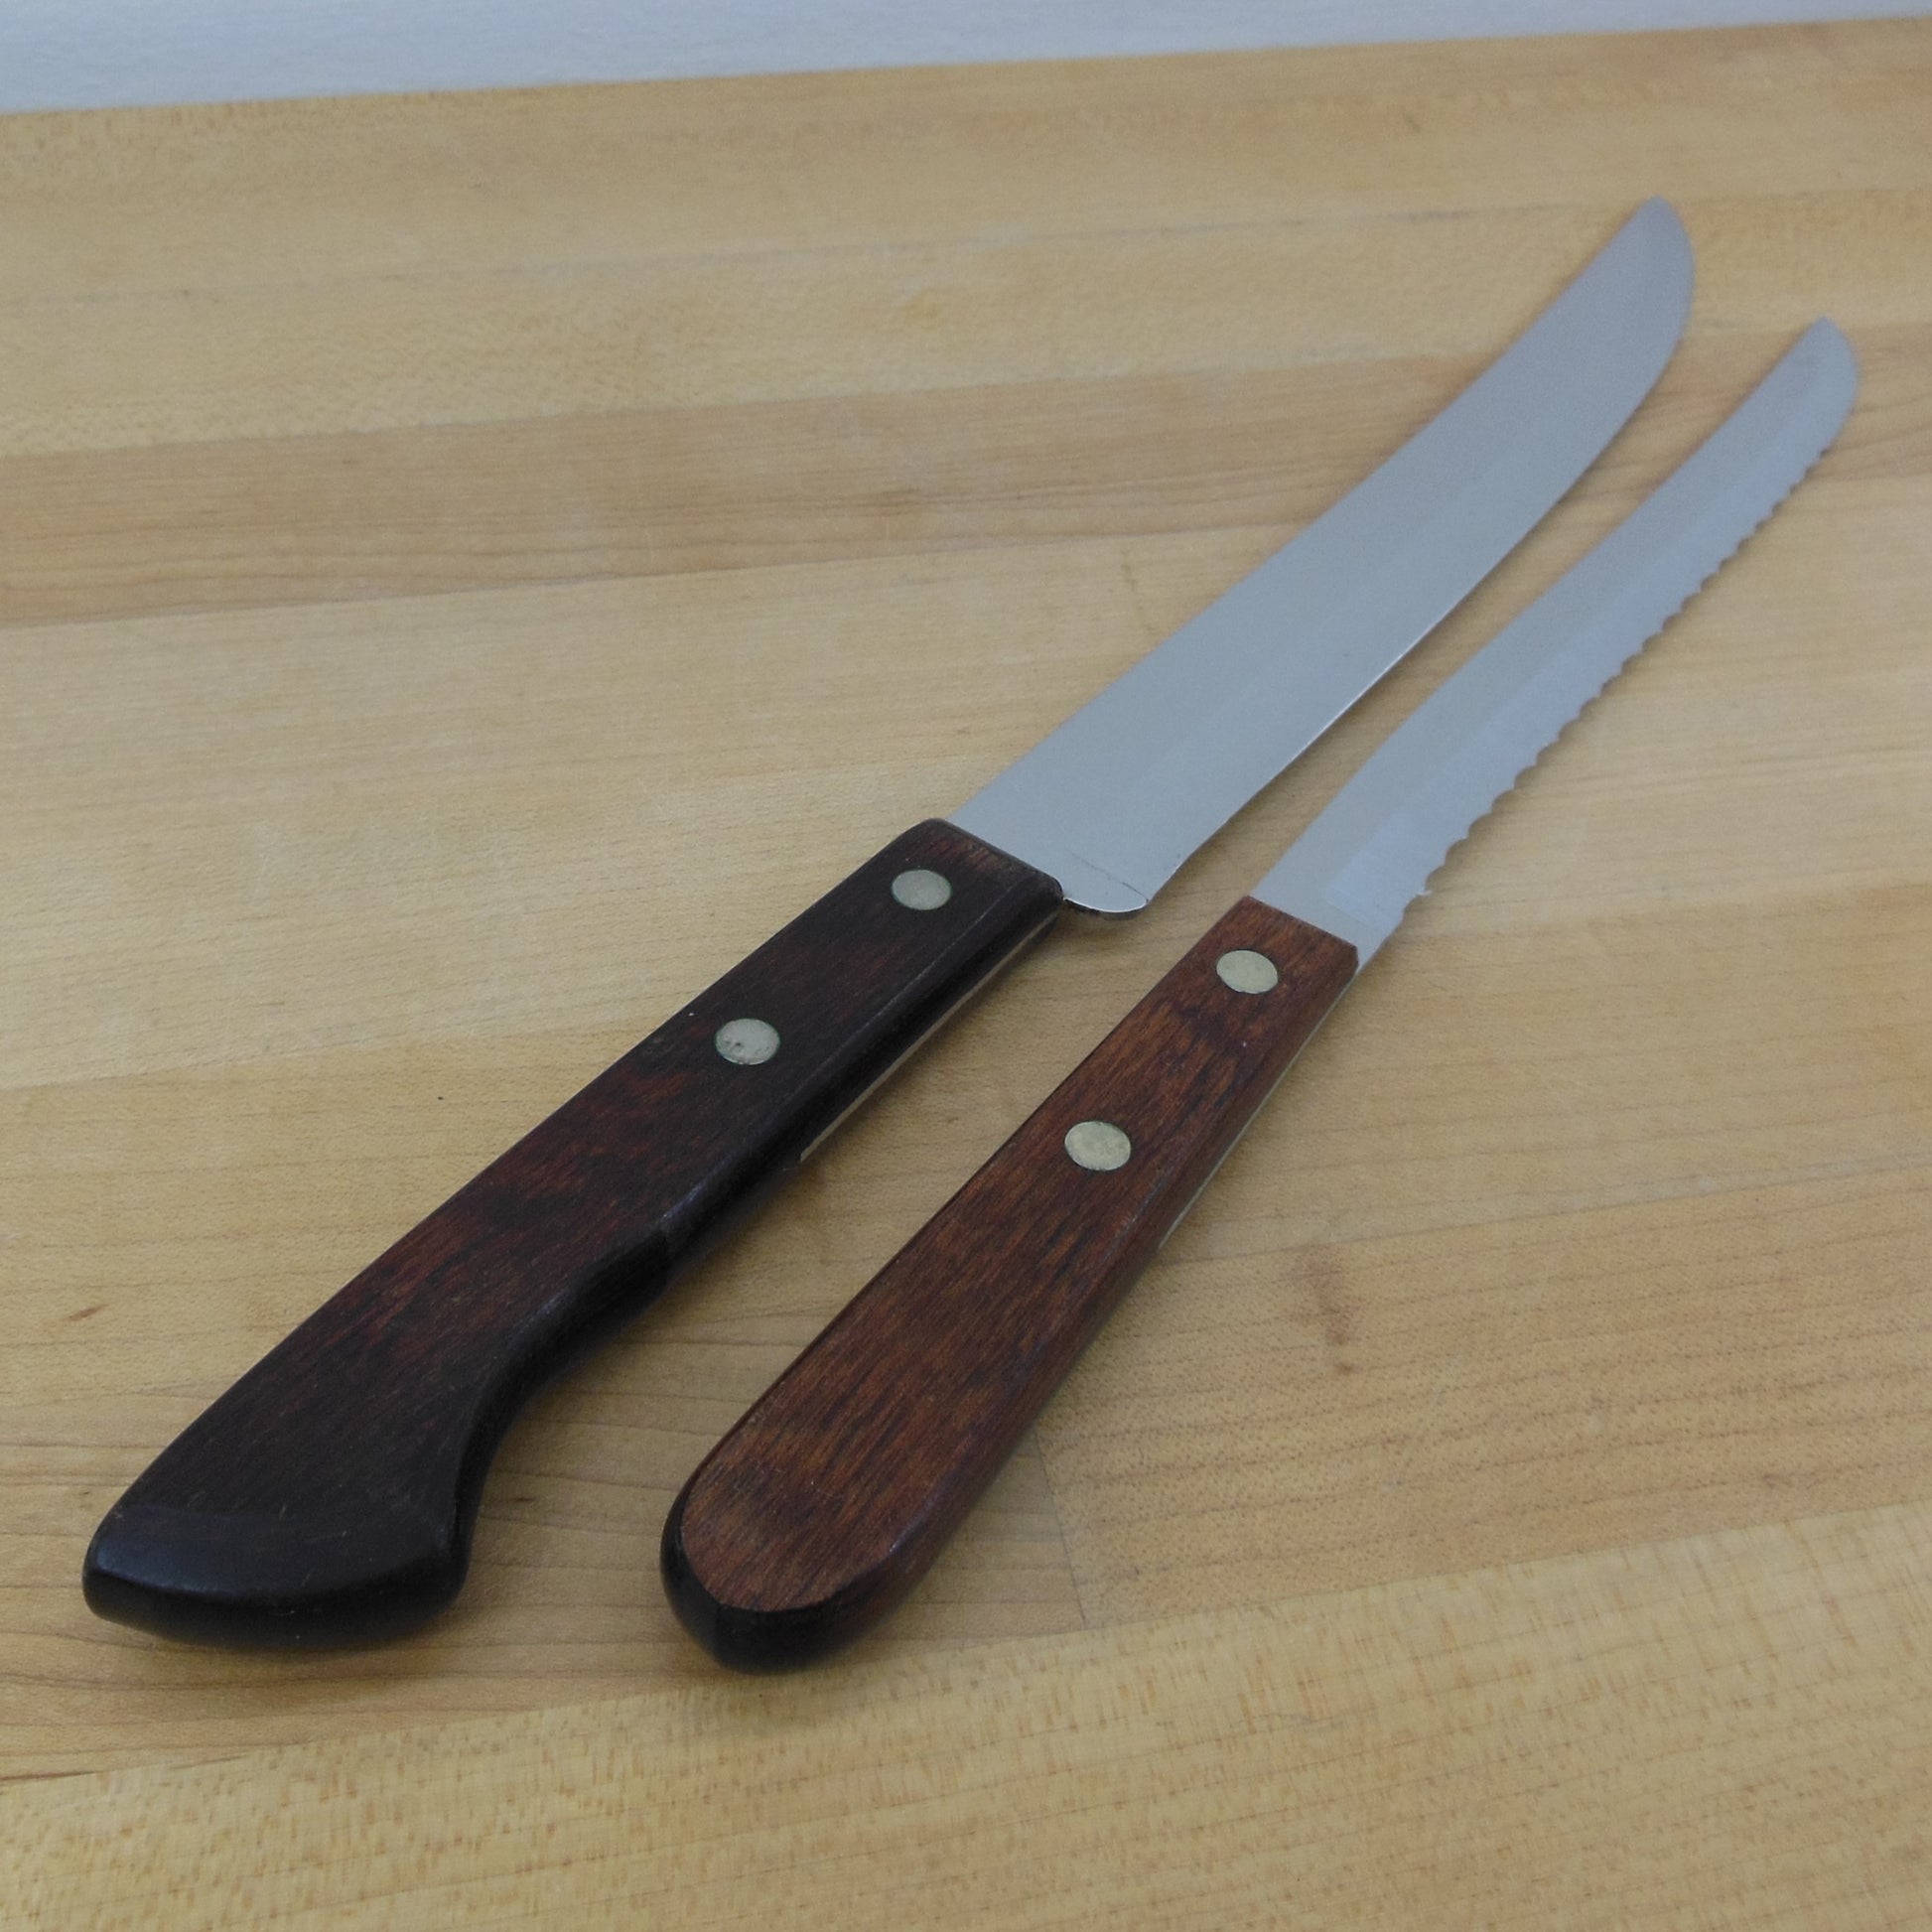 Oneida Wooden Handle Steak Knives - Set of 4